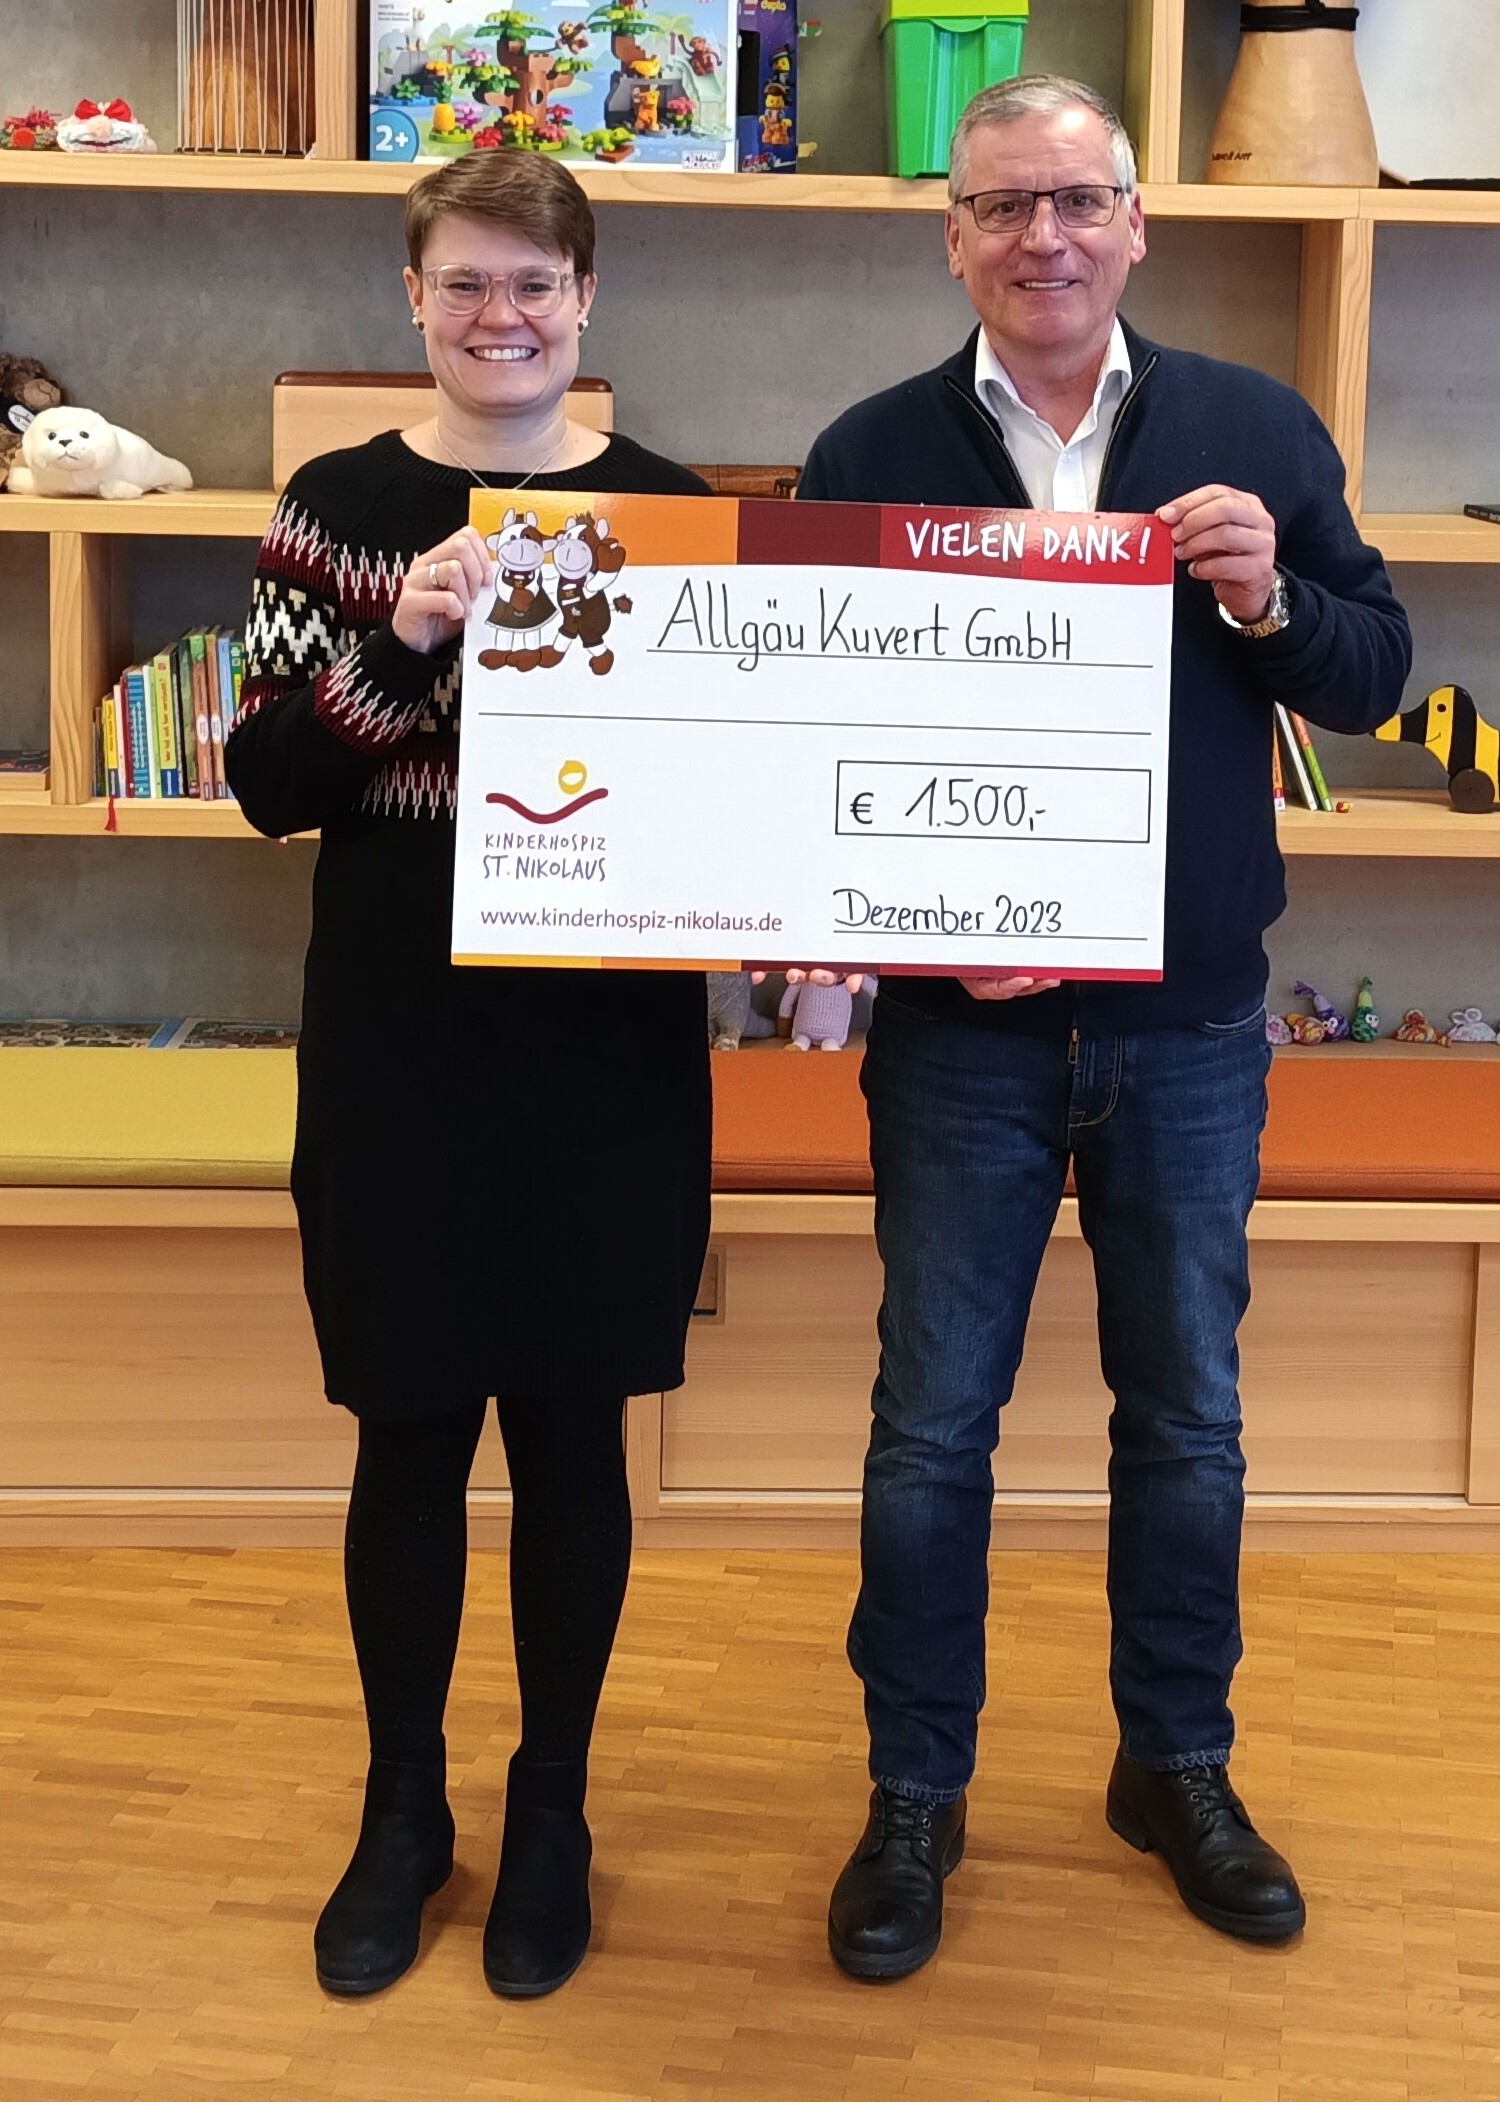 Allgäu Kuvert GmbH spendet 1500 Euro an das Kinderhospiz St. Nikolaus